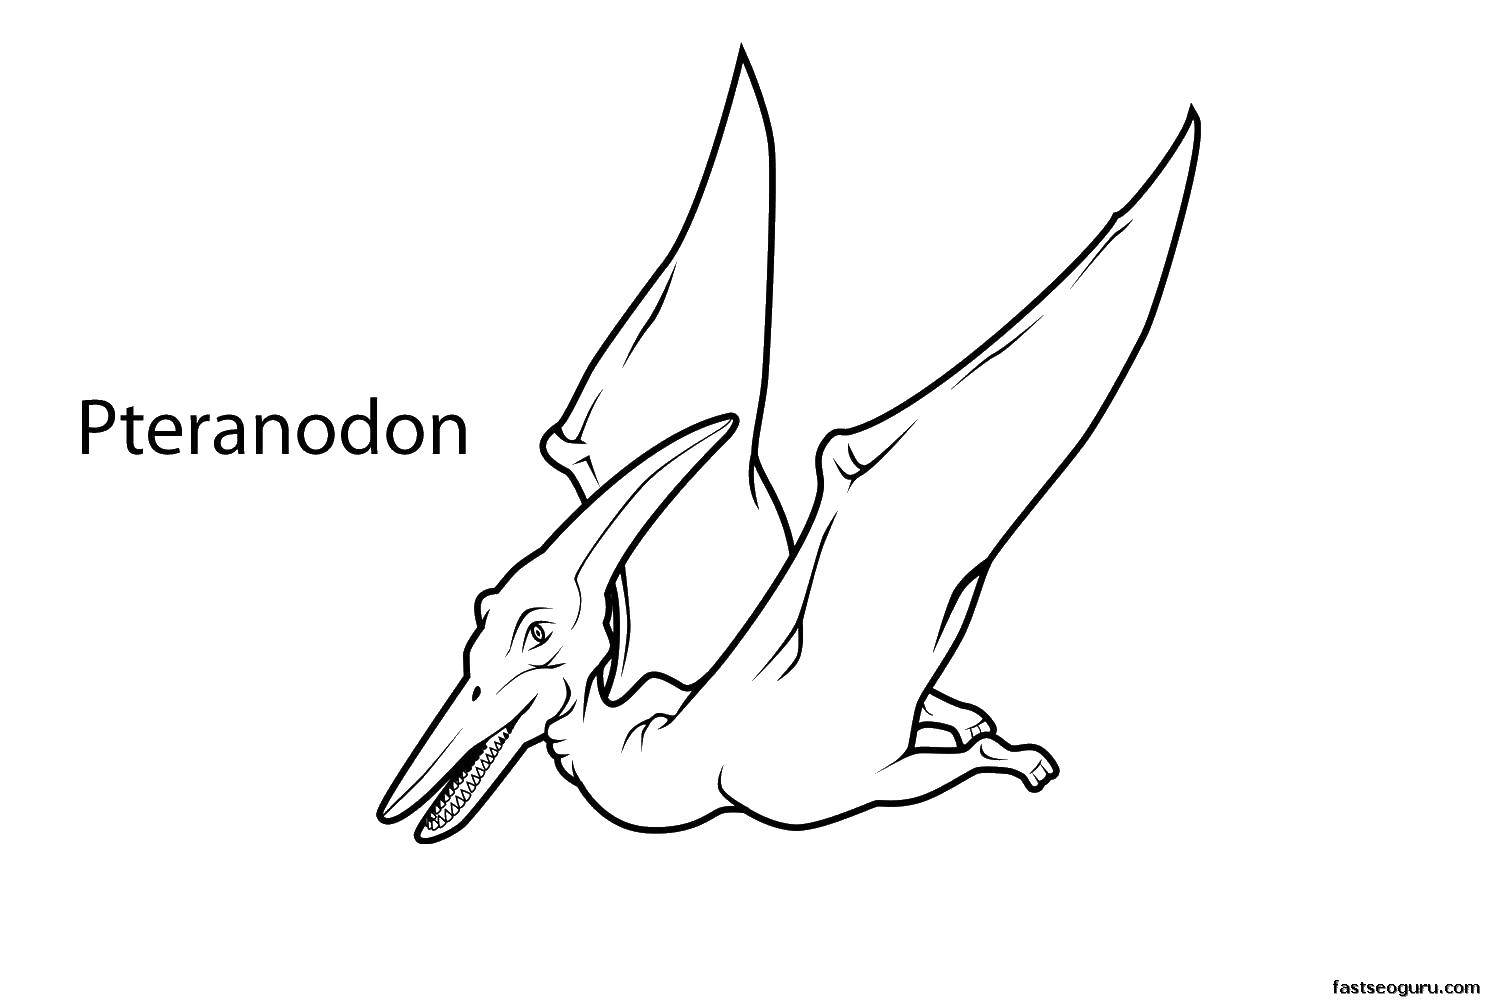 Coloring Pteranodon. Category dinosaur. Tags:  Pteranodon, dinosaur, wings.